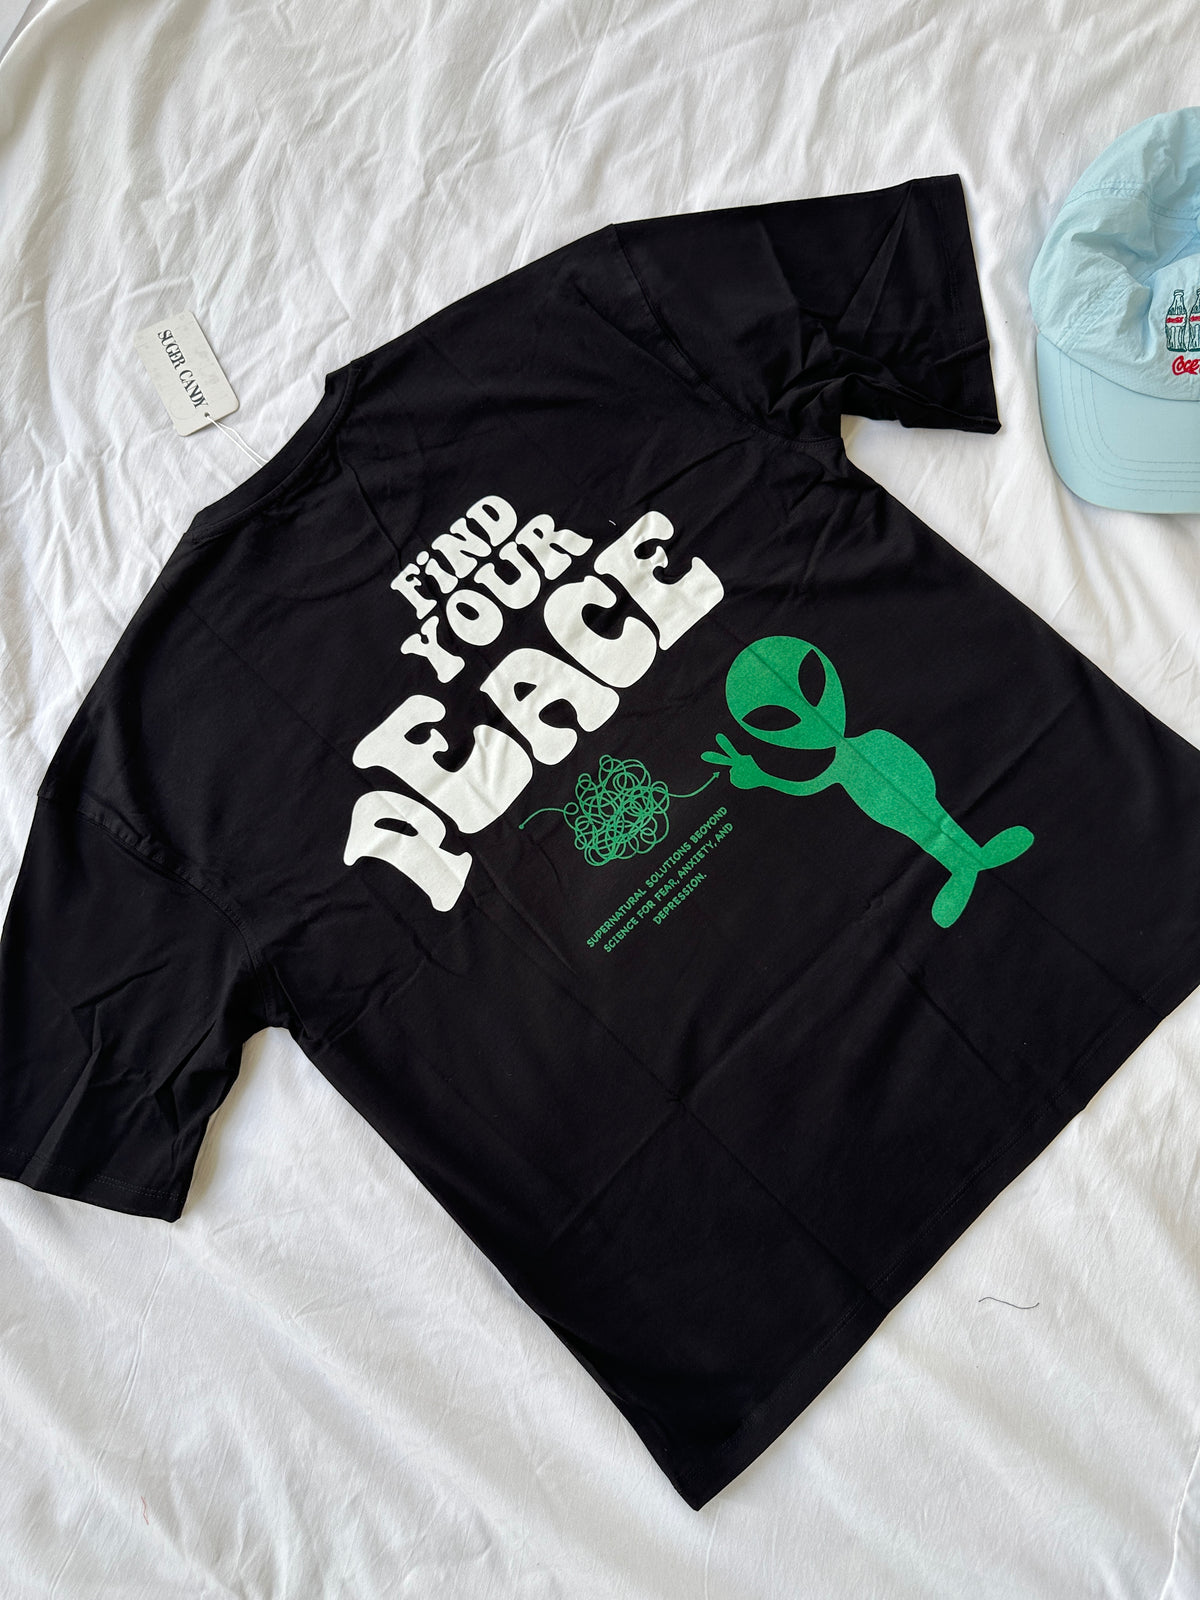 Alien loose tee-shirt